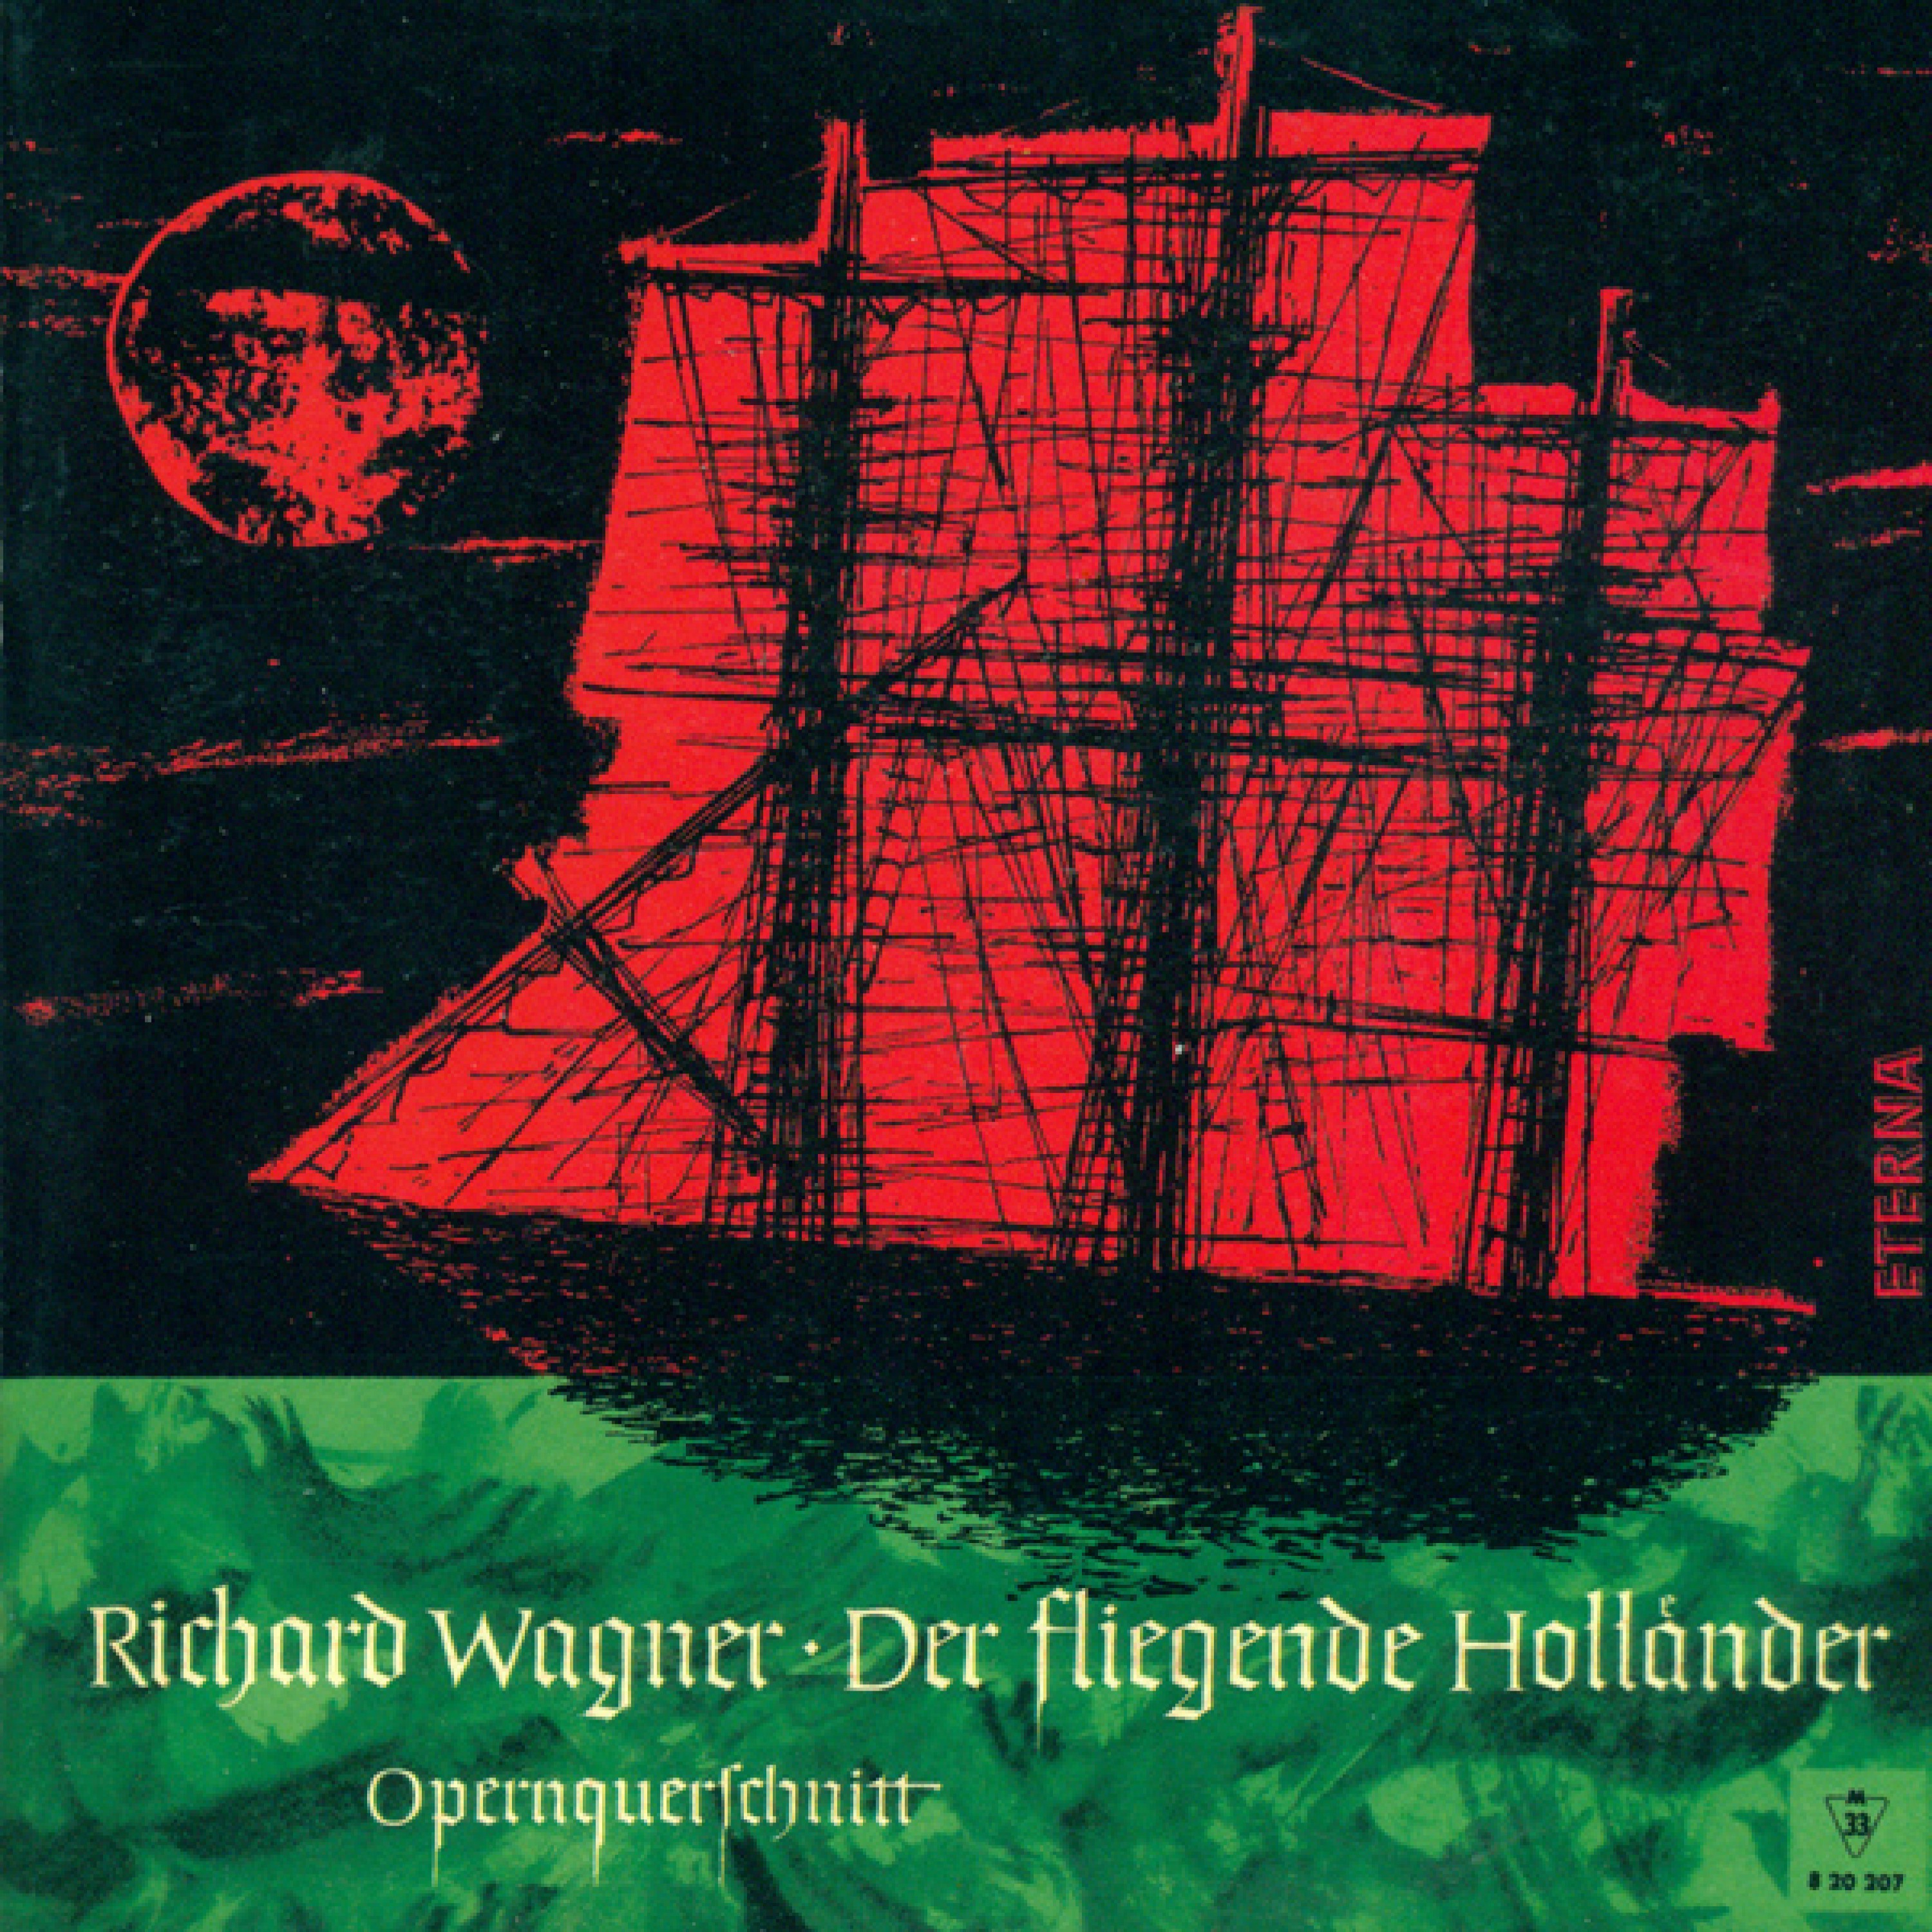 Richard Wagner: Fliegende Hollander (Der) [The Flying Dutchman] [Opera Excerpts] [Konwitschny]